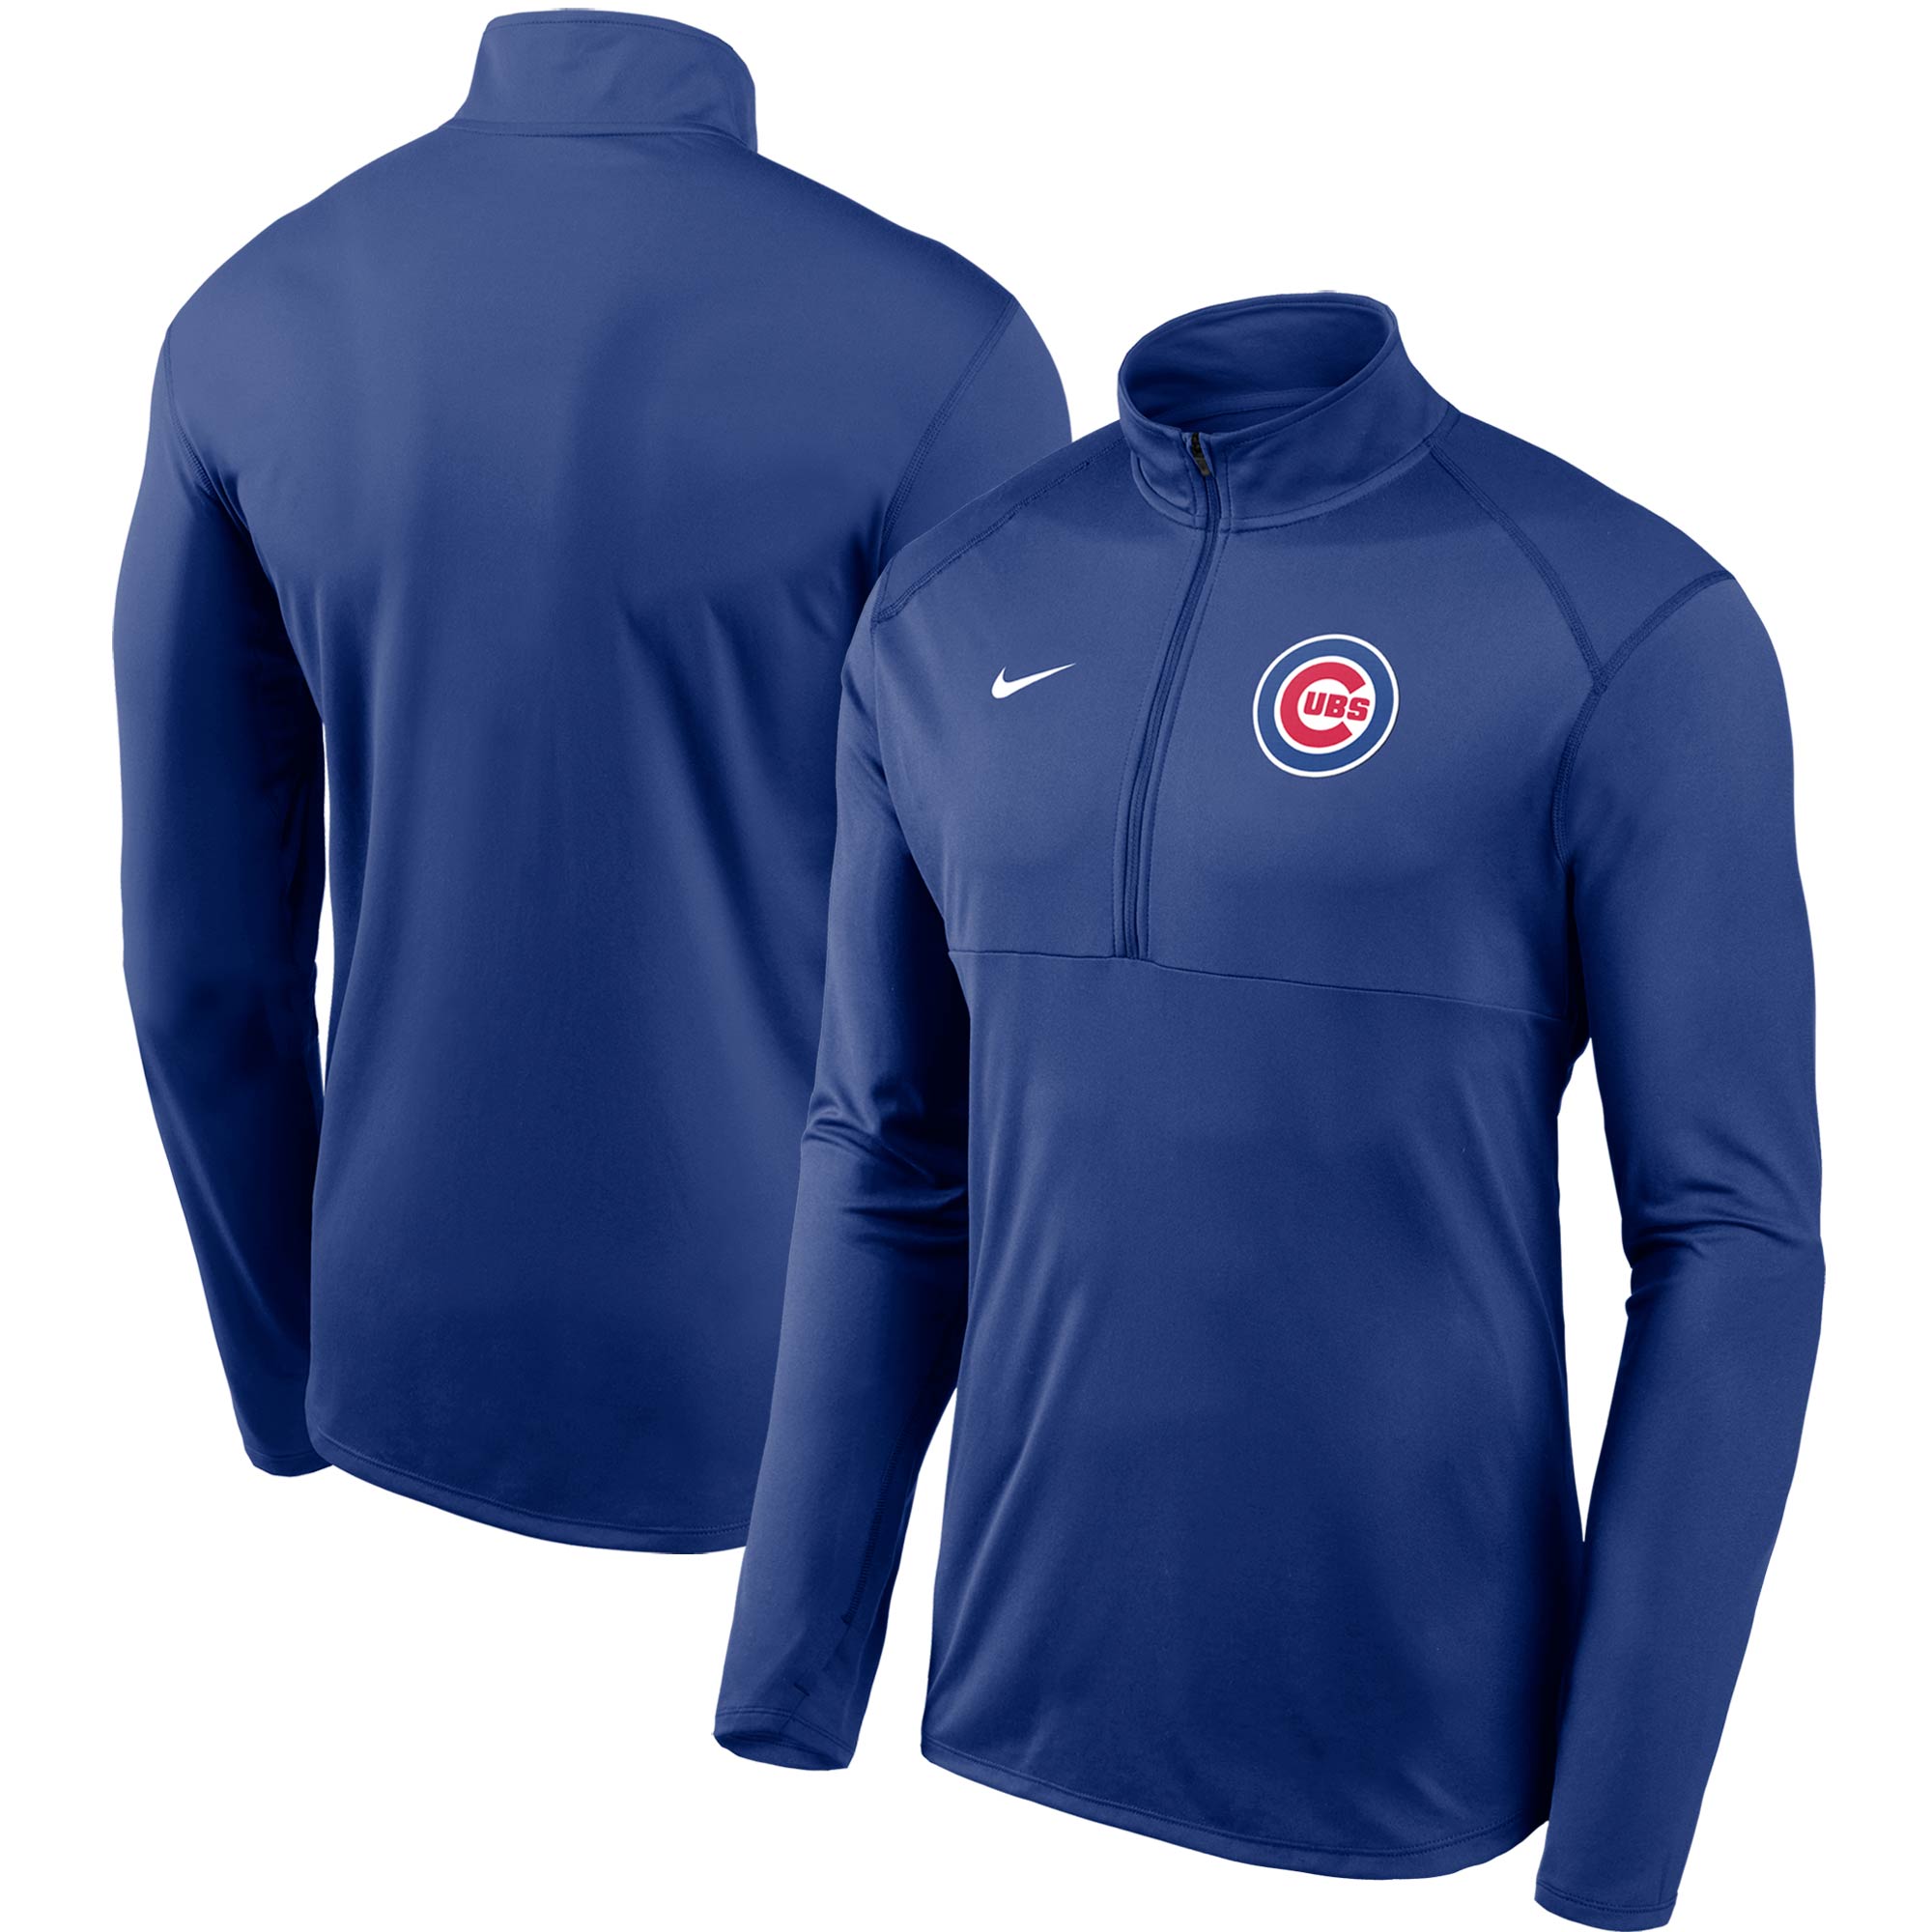 Men's Nike Royal Chicago Cubs Team Logo Element Performance Half-Zip Pullover Jacket - image 1 of 3